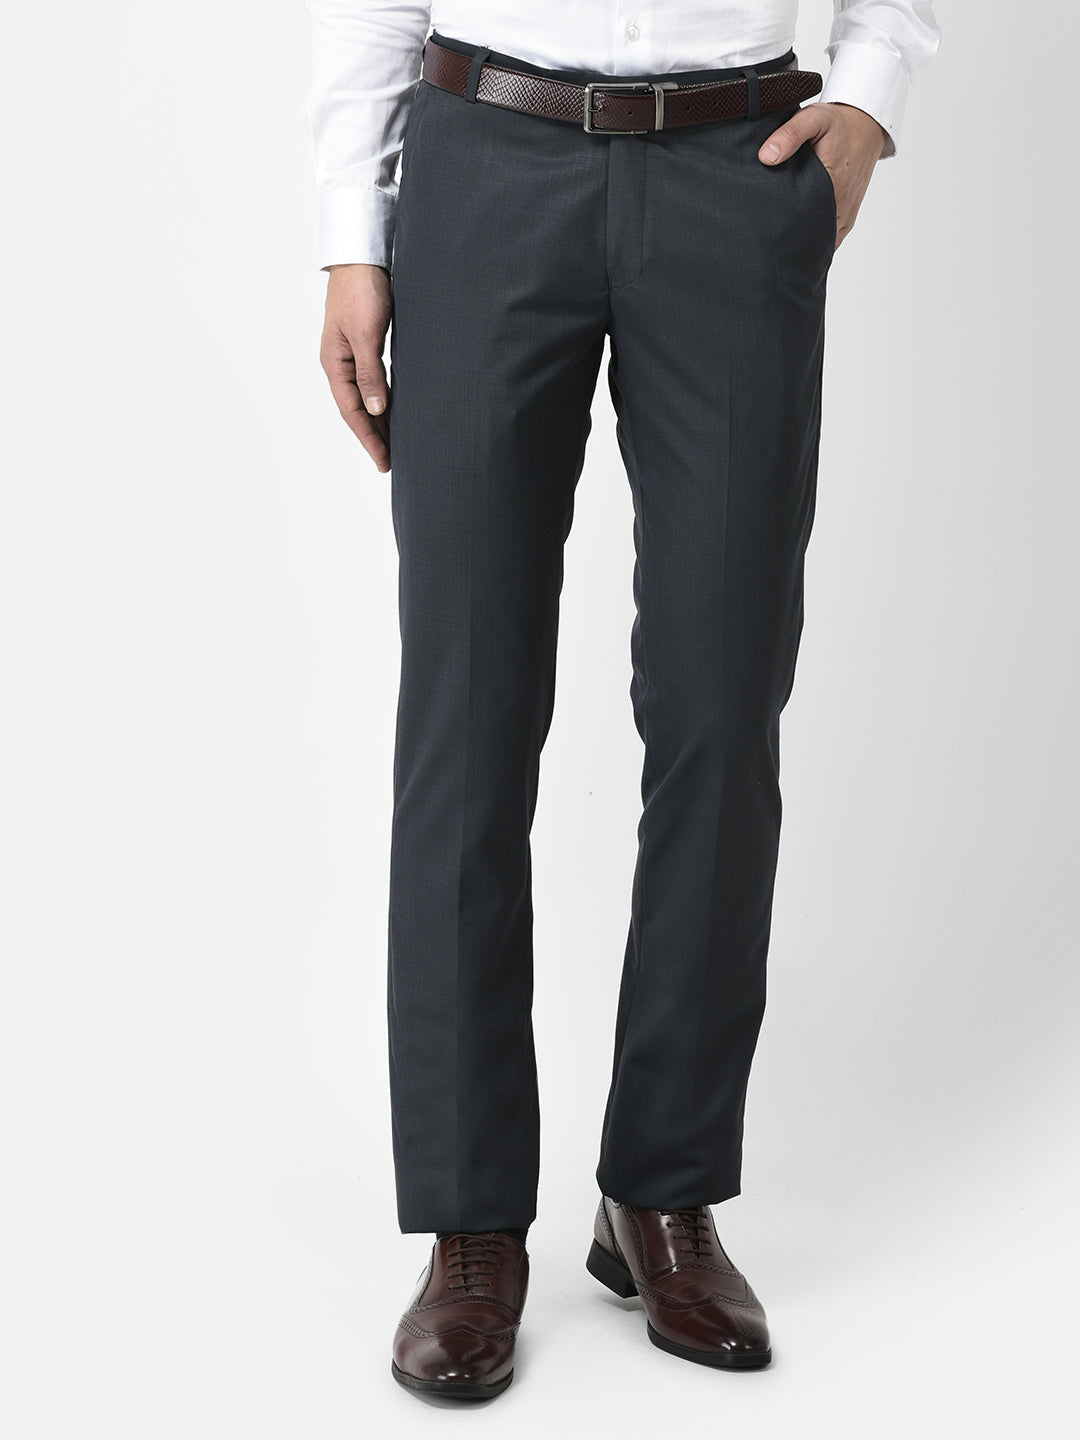 MANCREW Formal Pants for men  Formal Trousers Combo  Light Grey Black